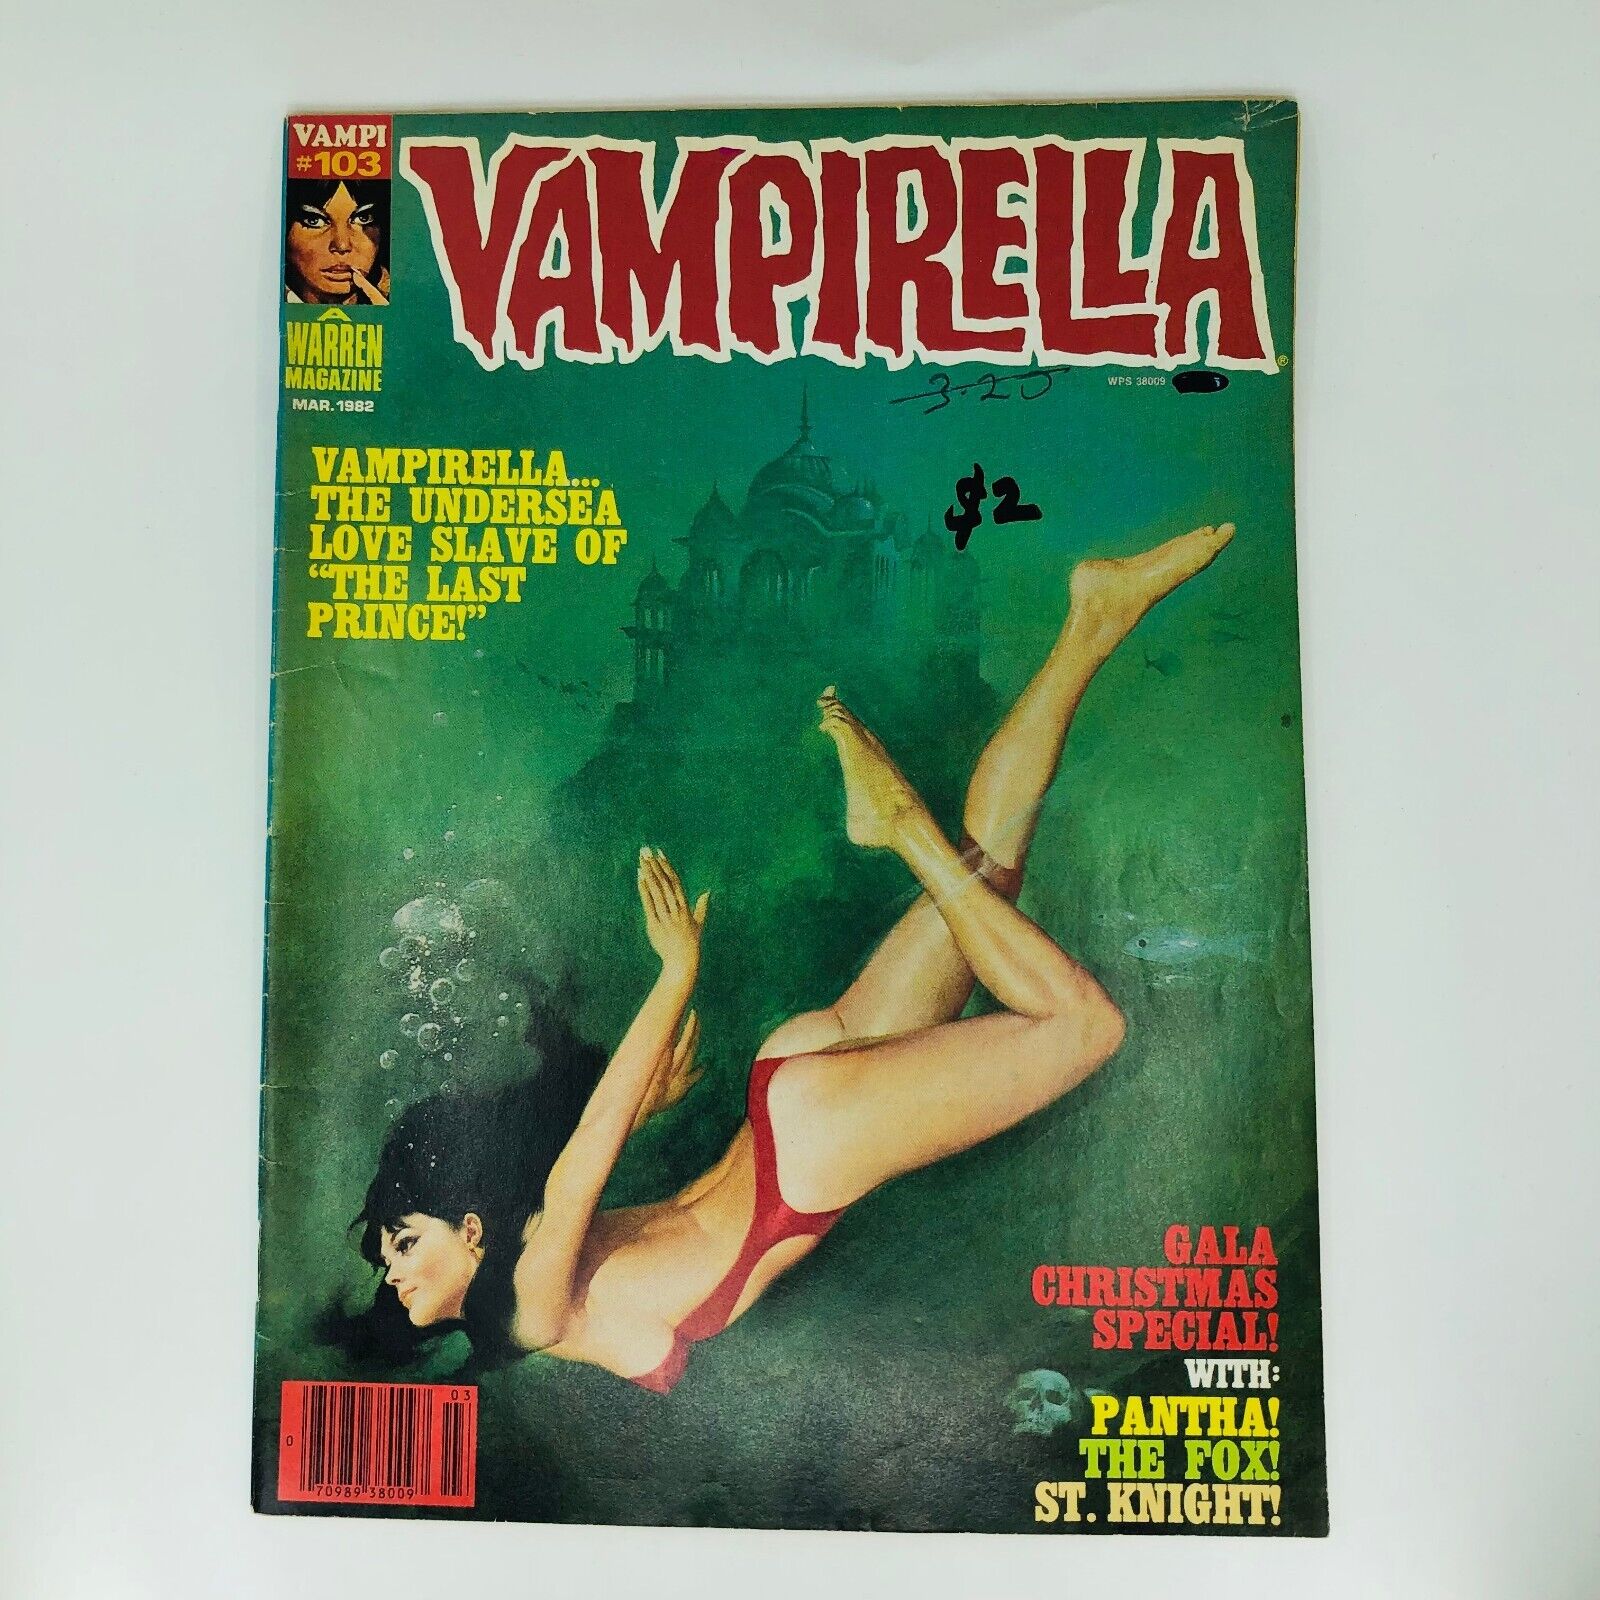 Vampirella #103 - Vampire - Horror Magazine - Warren - 1982 March